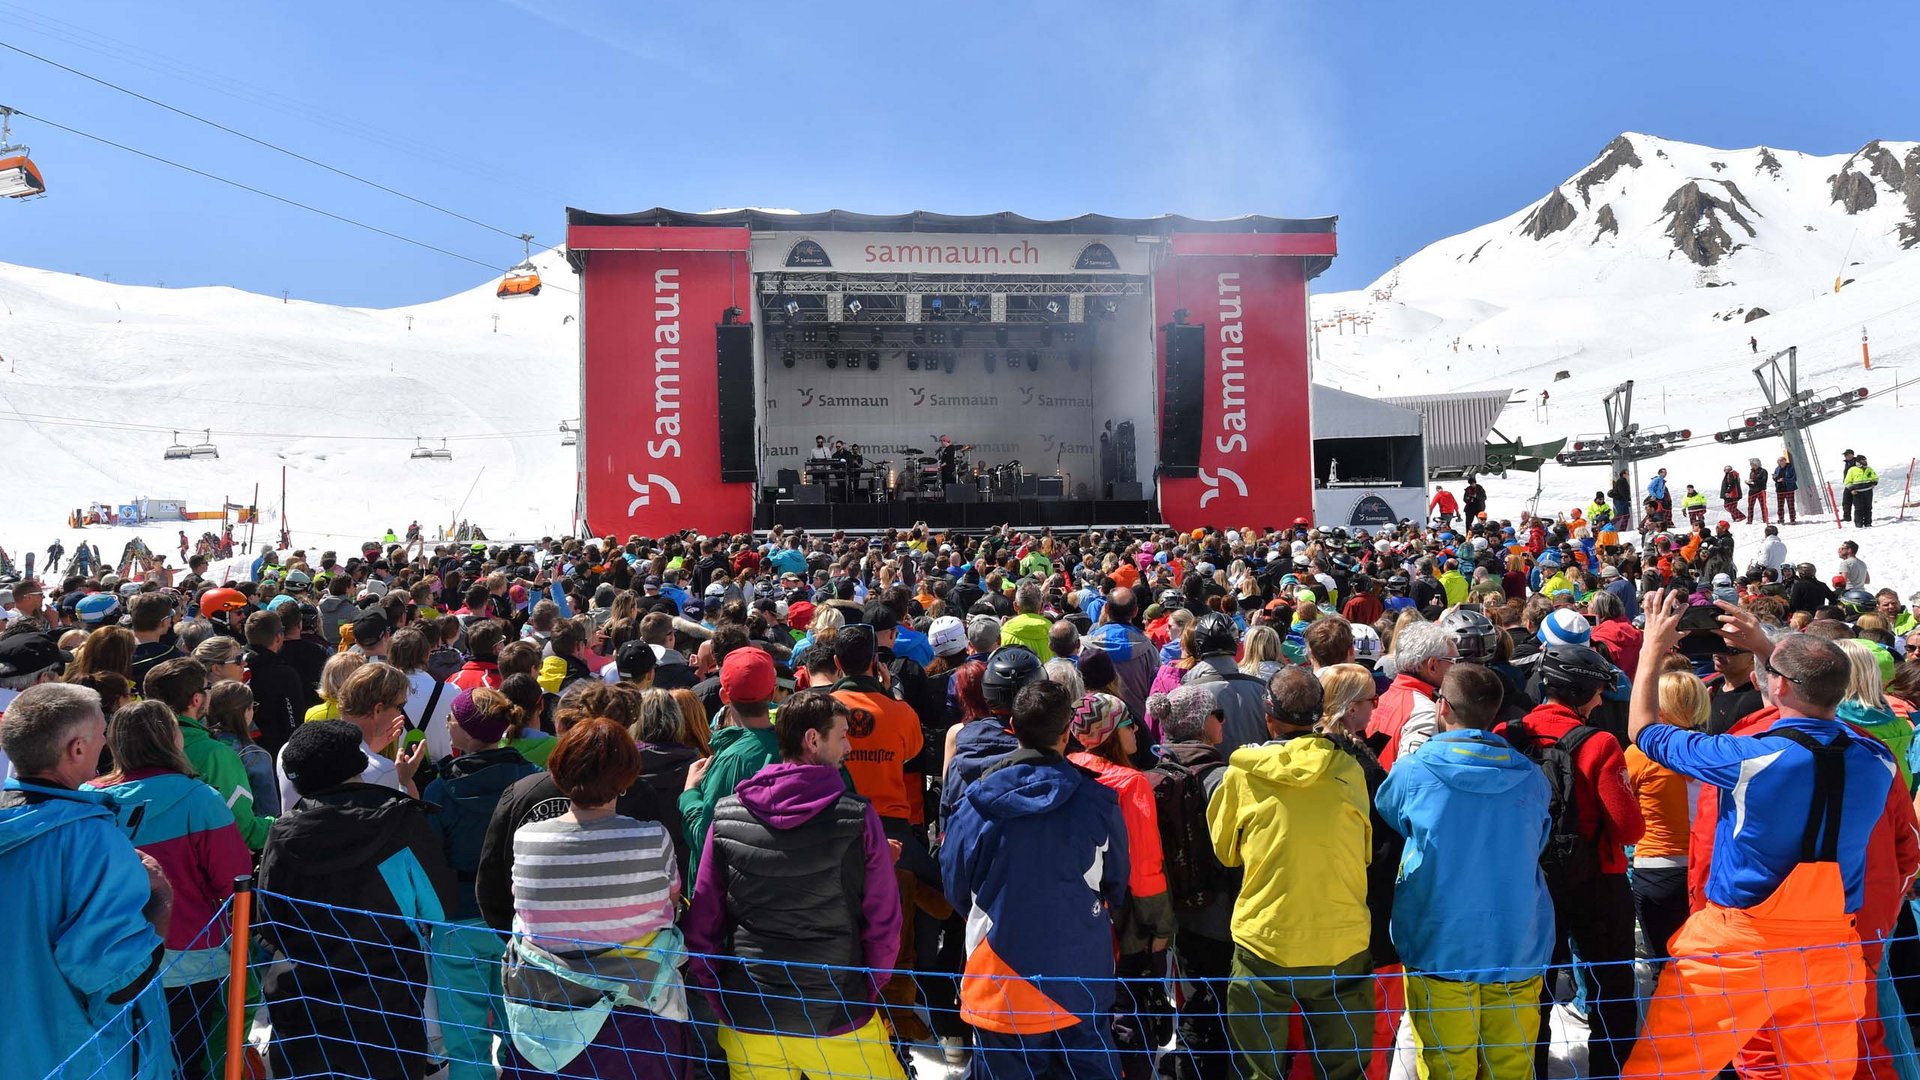 Ischgl & Samnaun: events near our ski shops